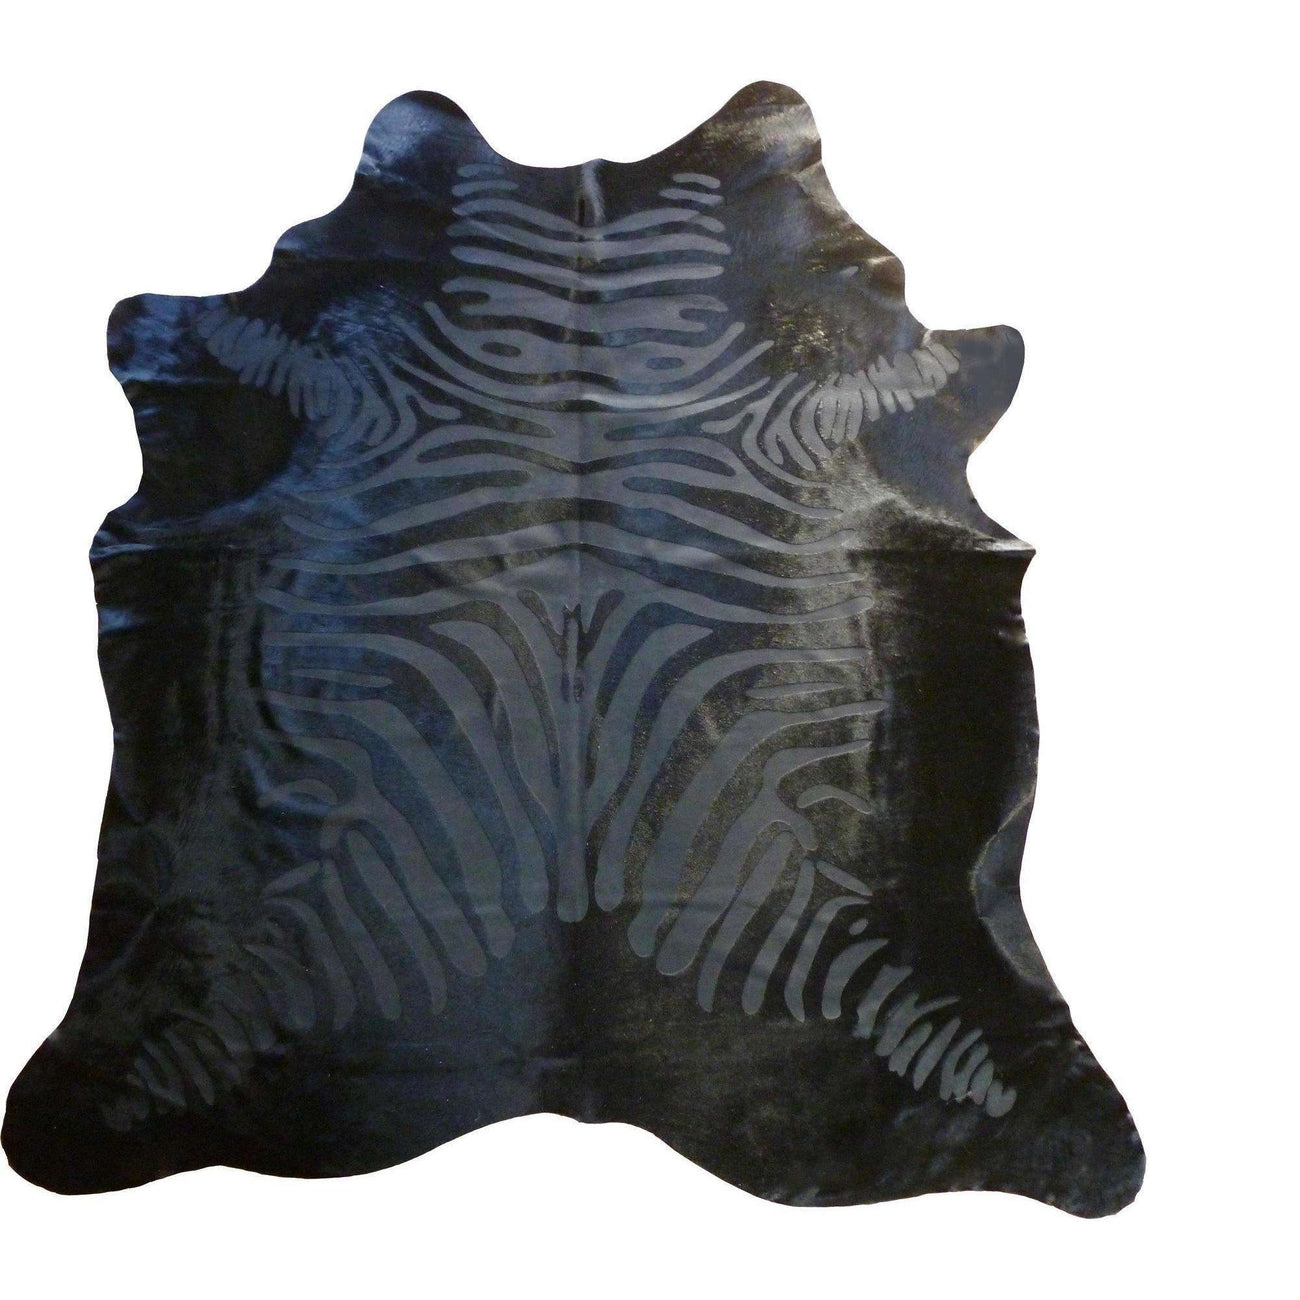 Pergamino, Zebra Black On Black Animal Print Cowhide